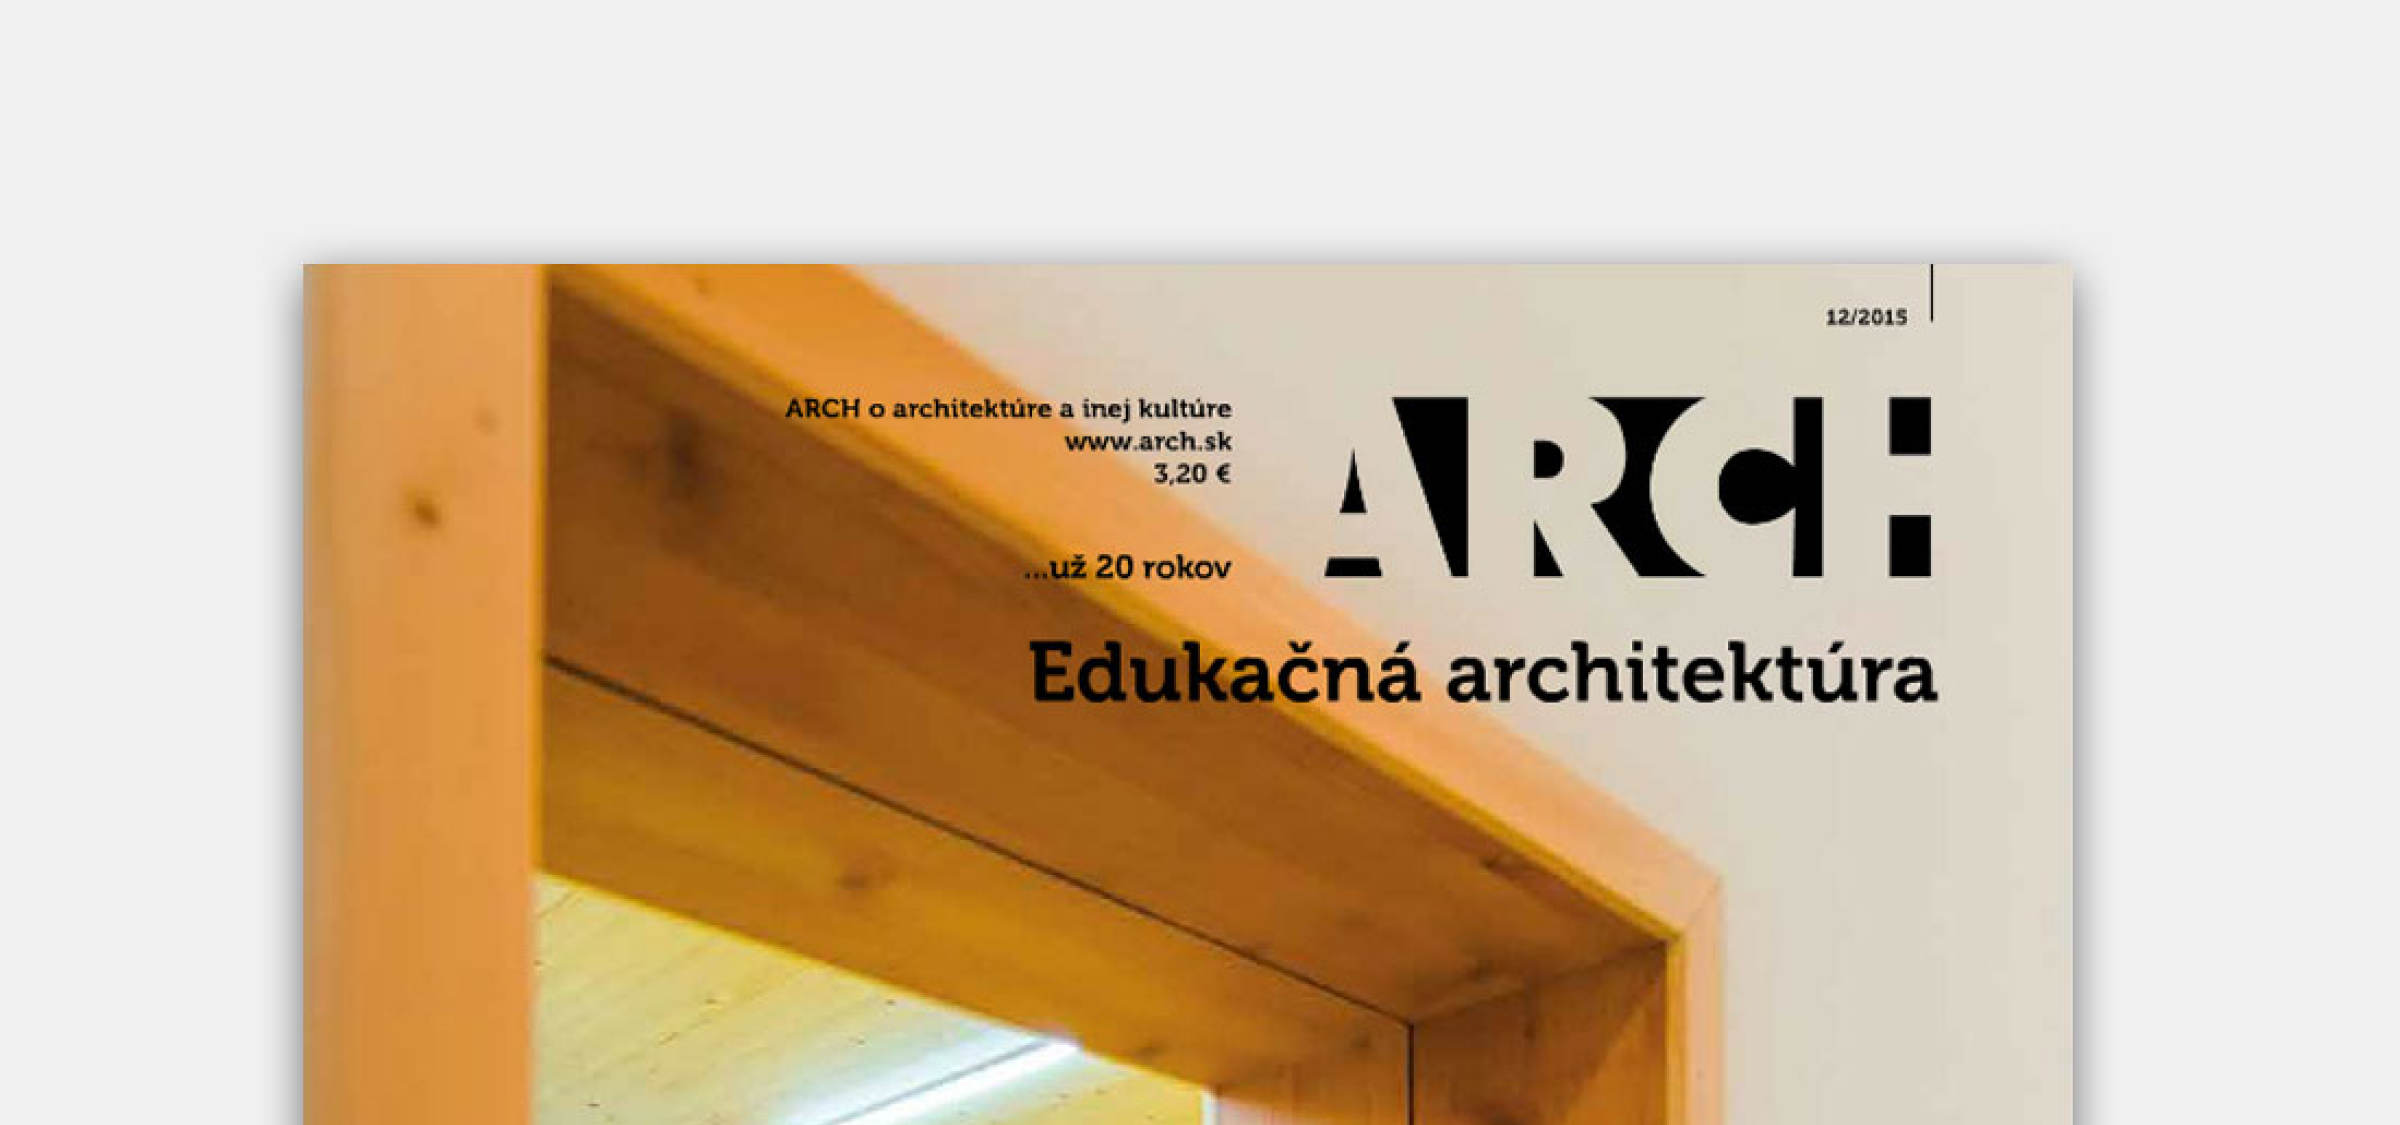 MORPH project in the new issue of ARCH magazine | News | Atrium Architekti